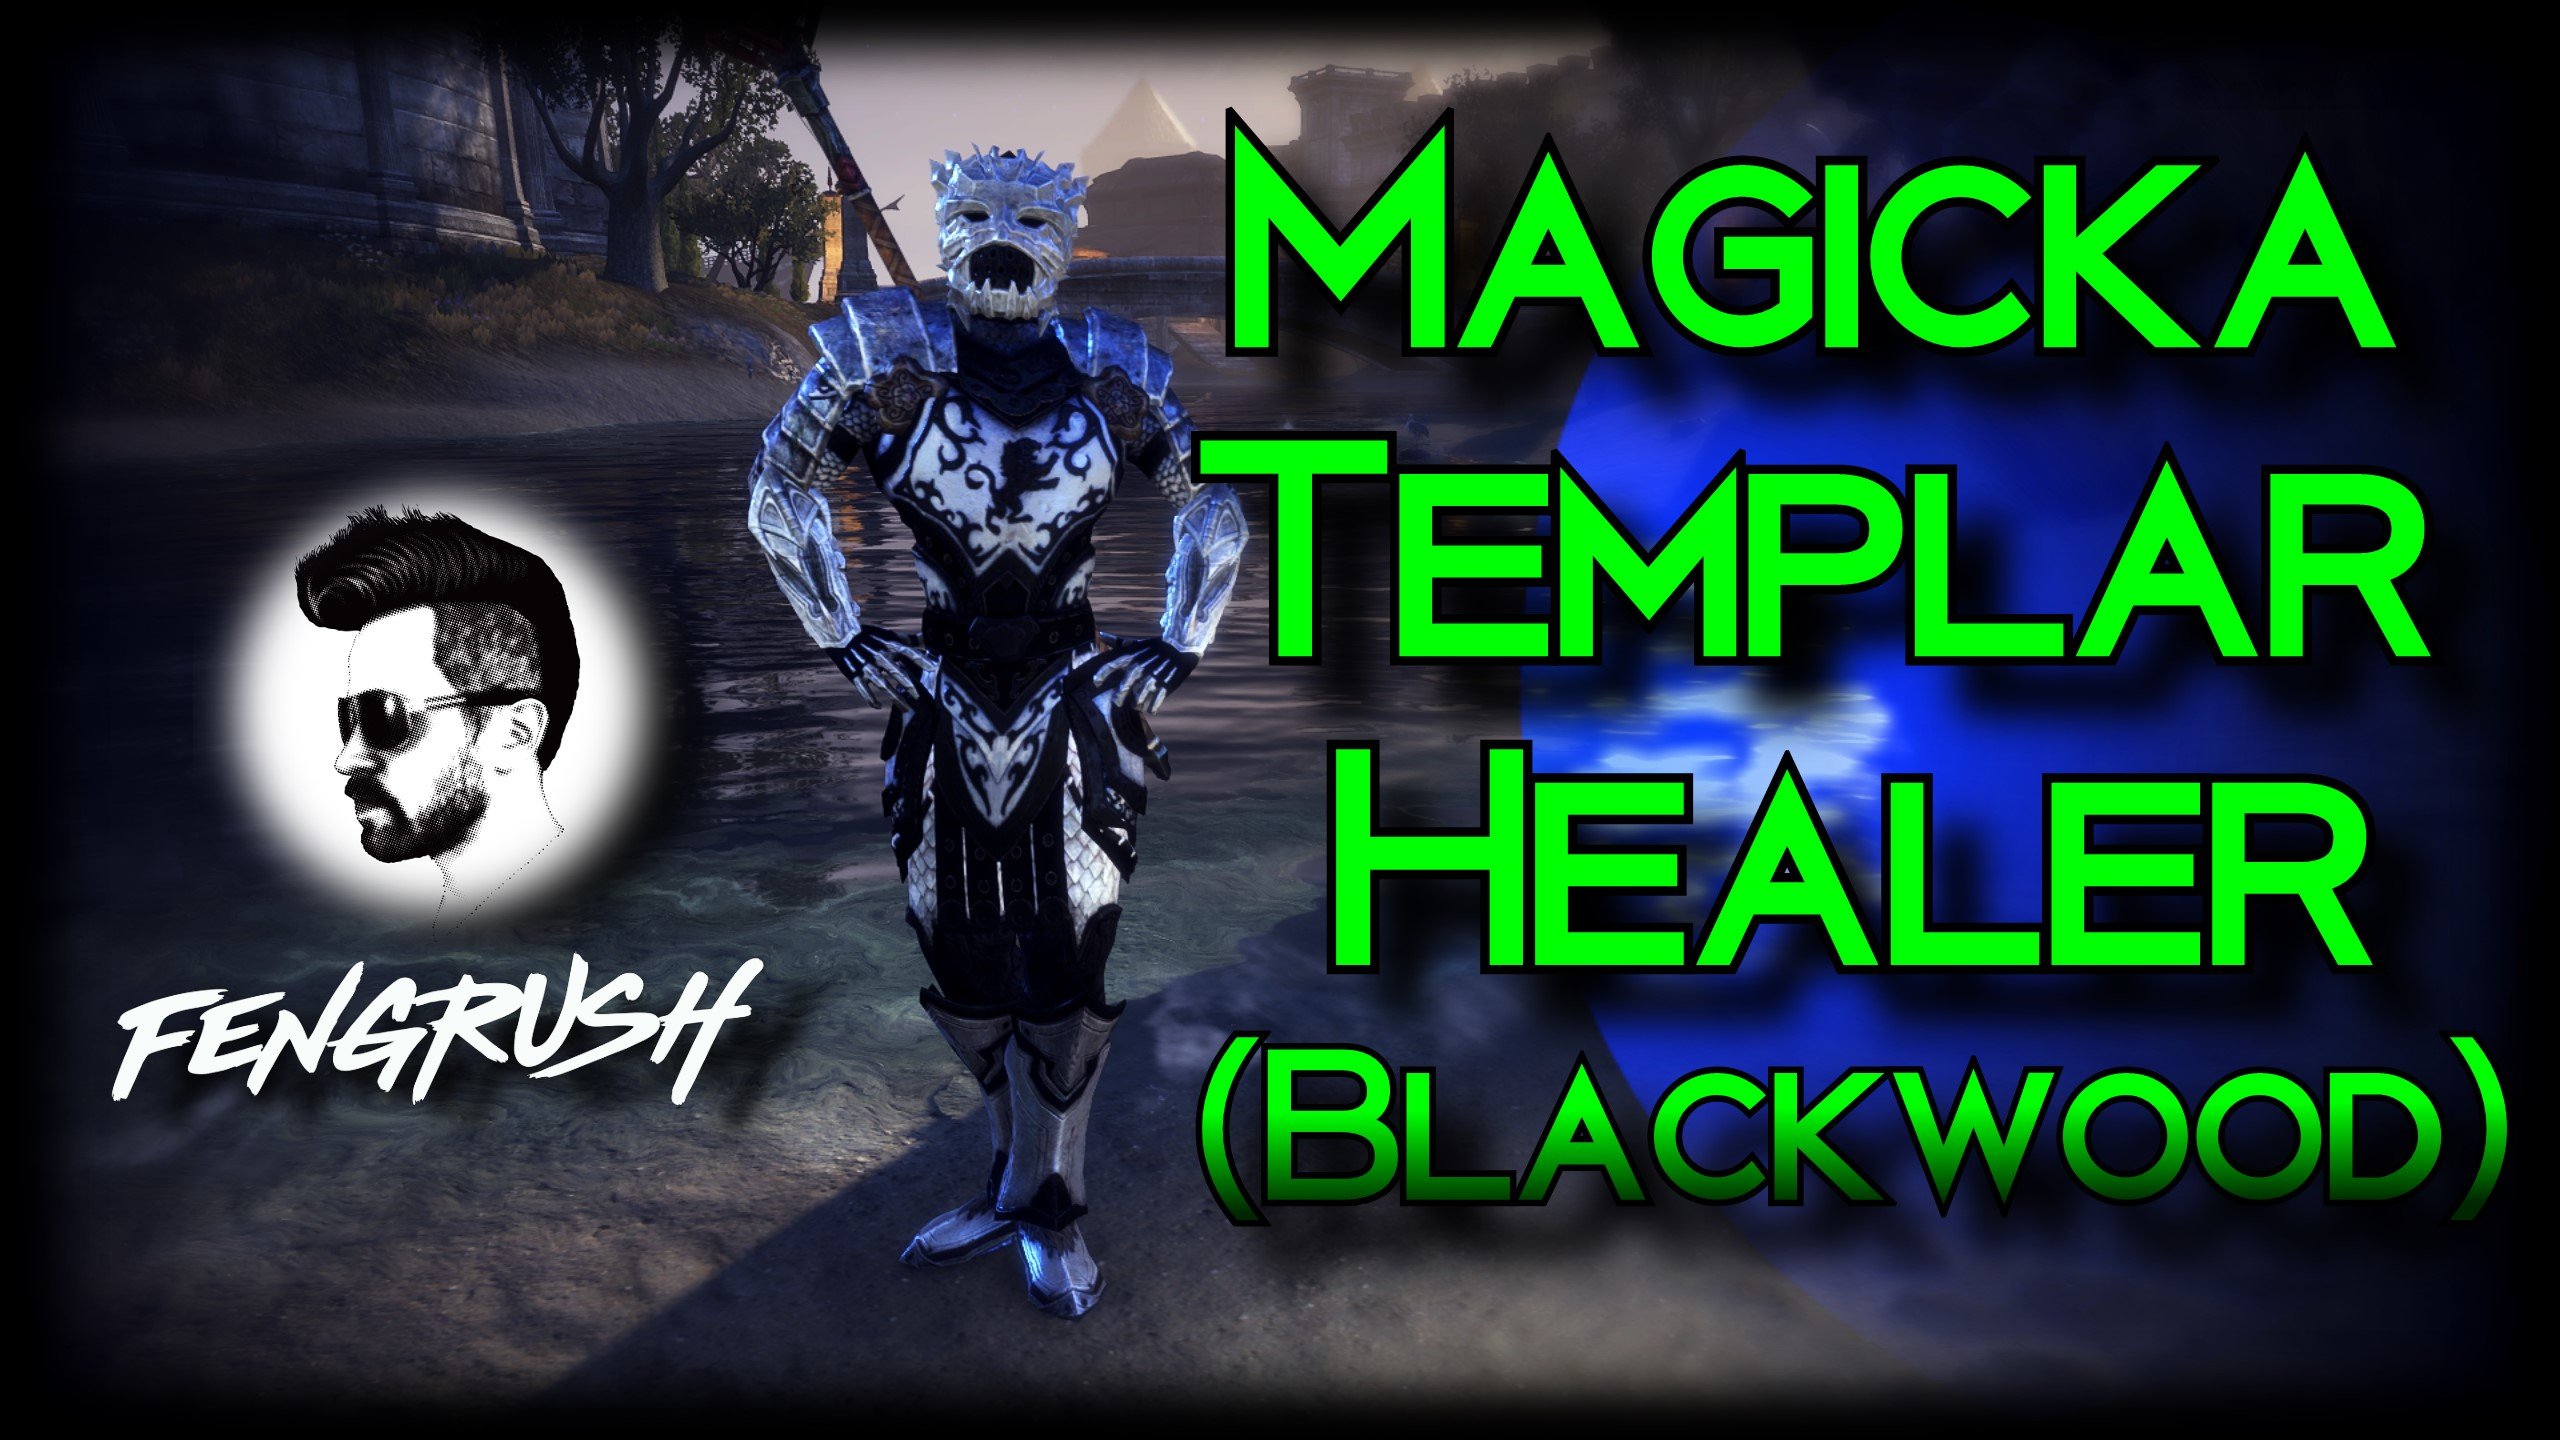 Fengrush’s PVP Magicka Templar Healer Build for ESO